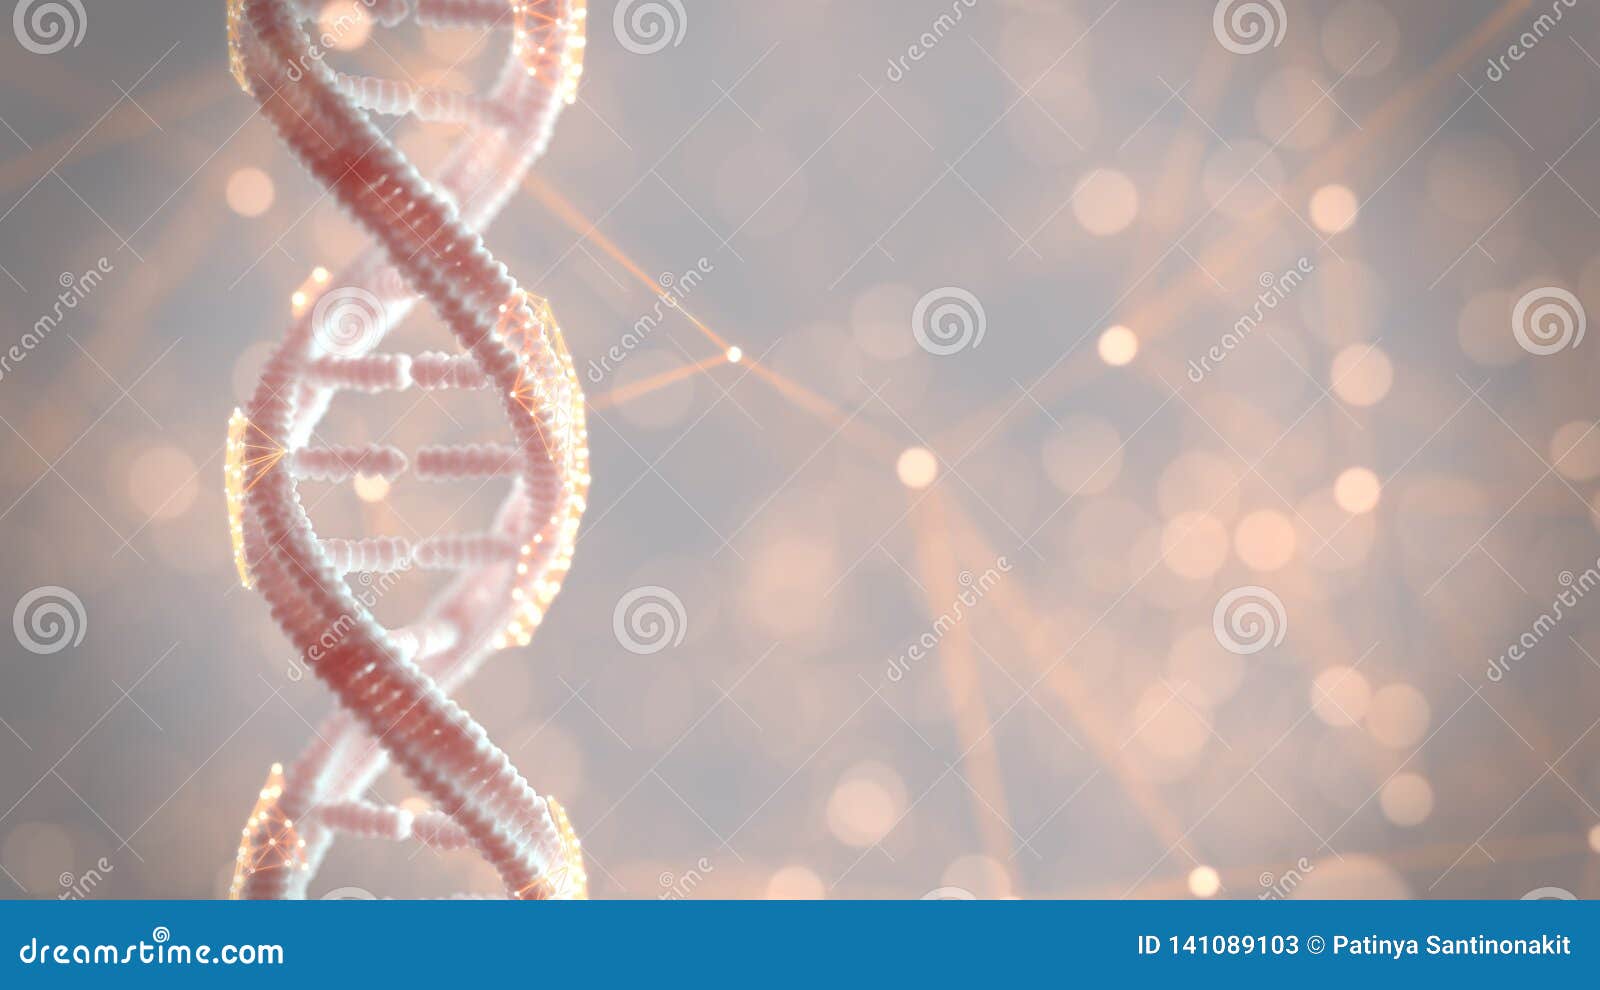 dna structure genetic material macro